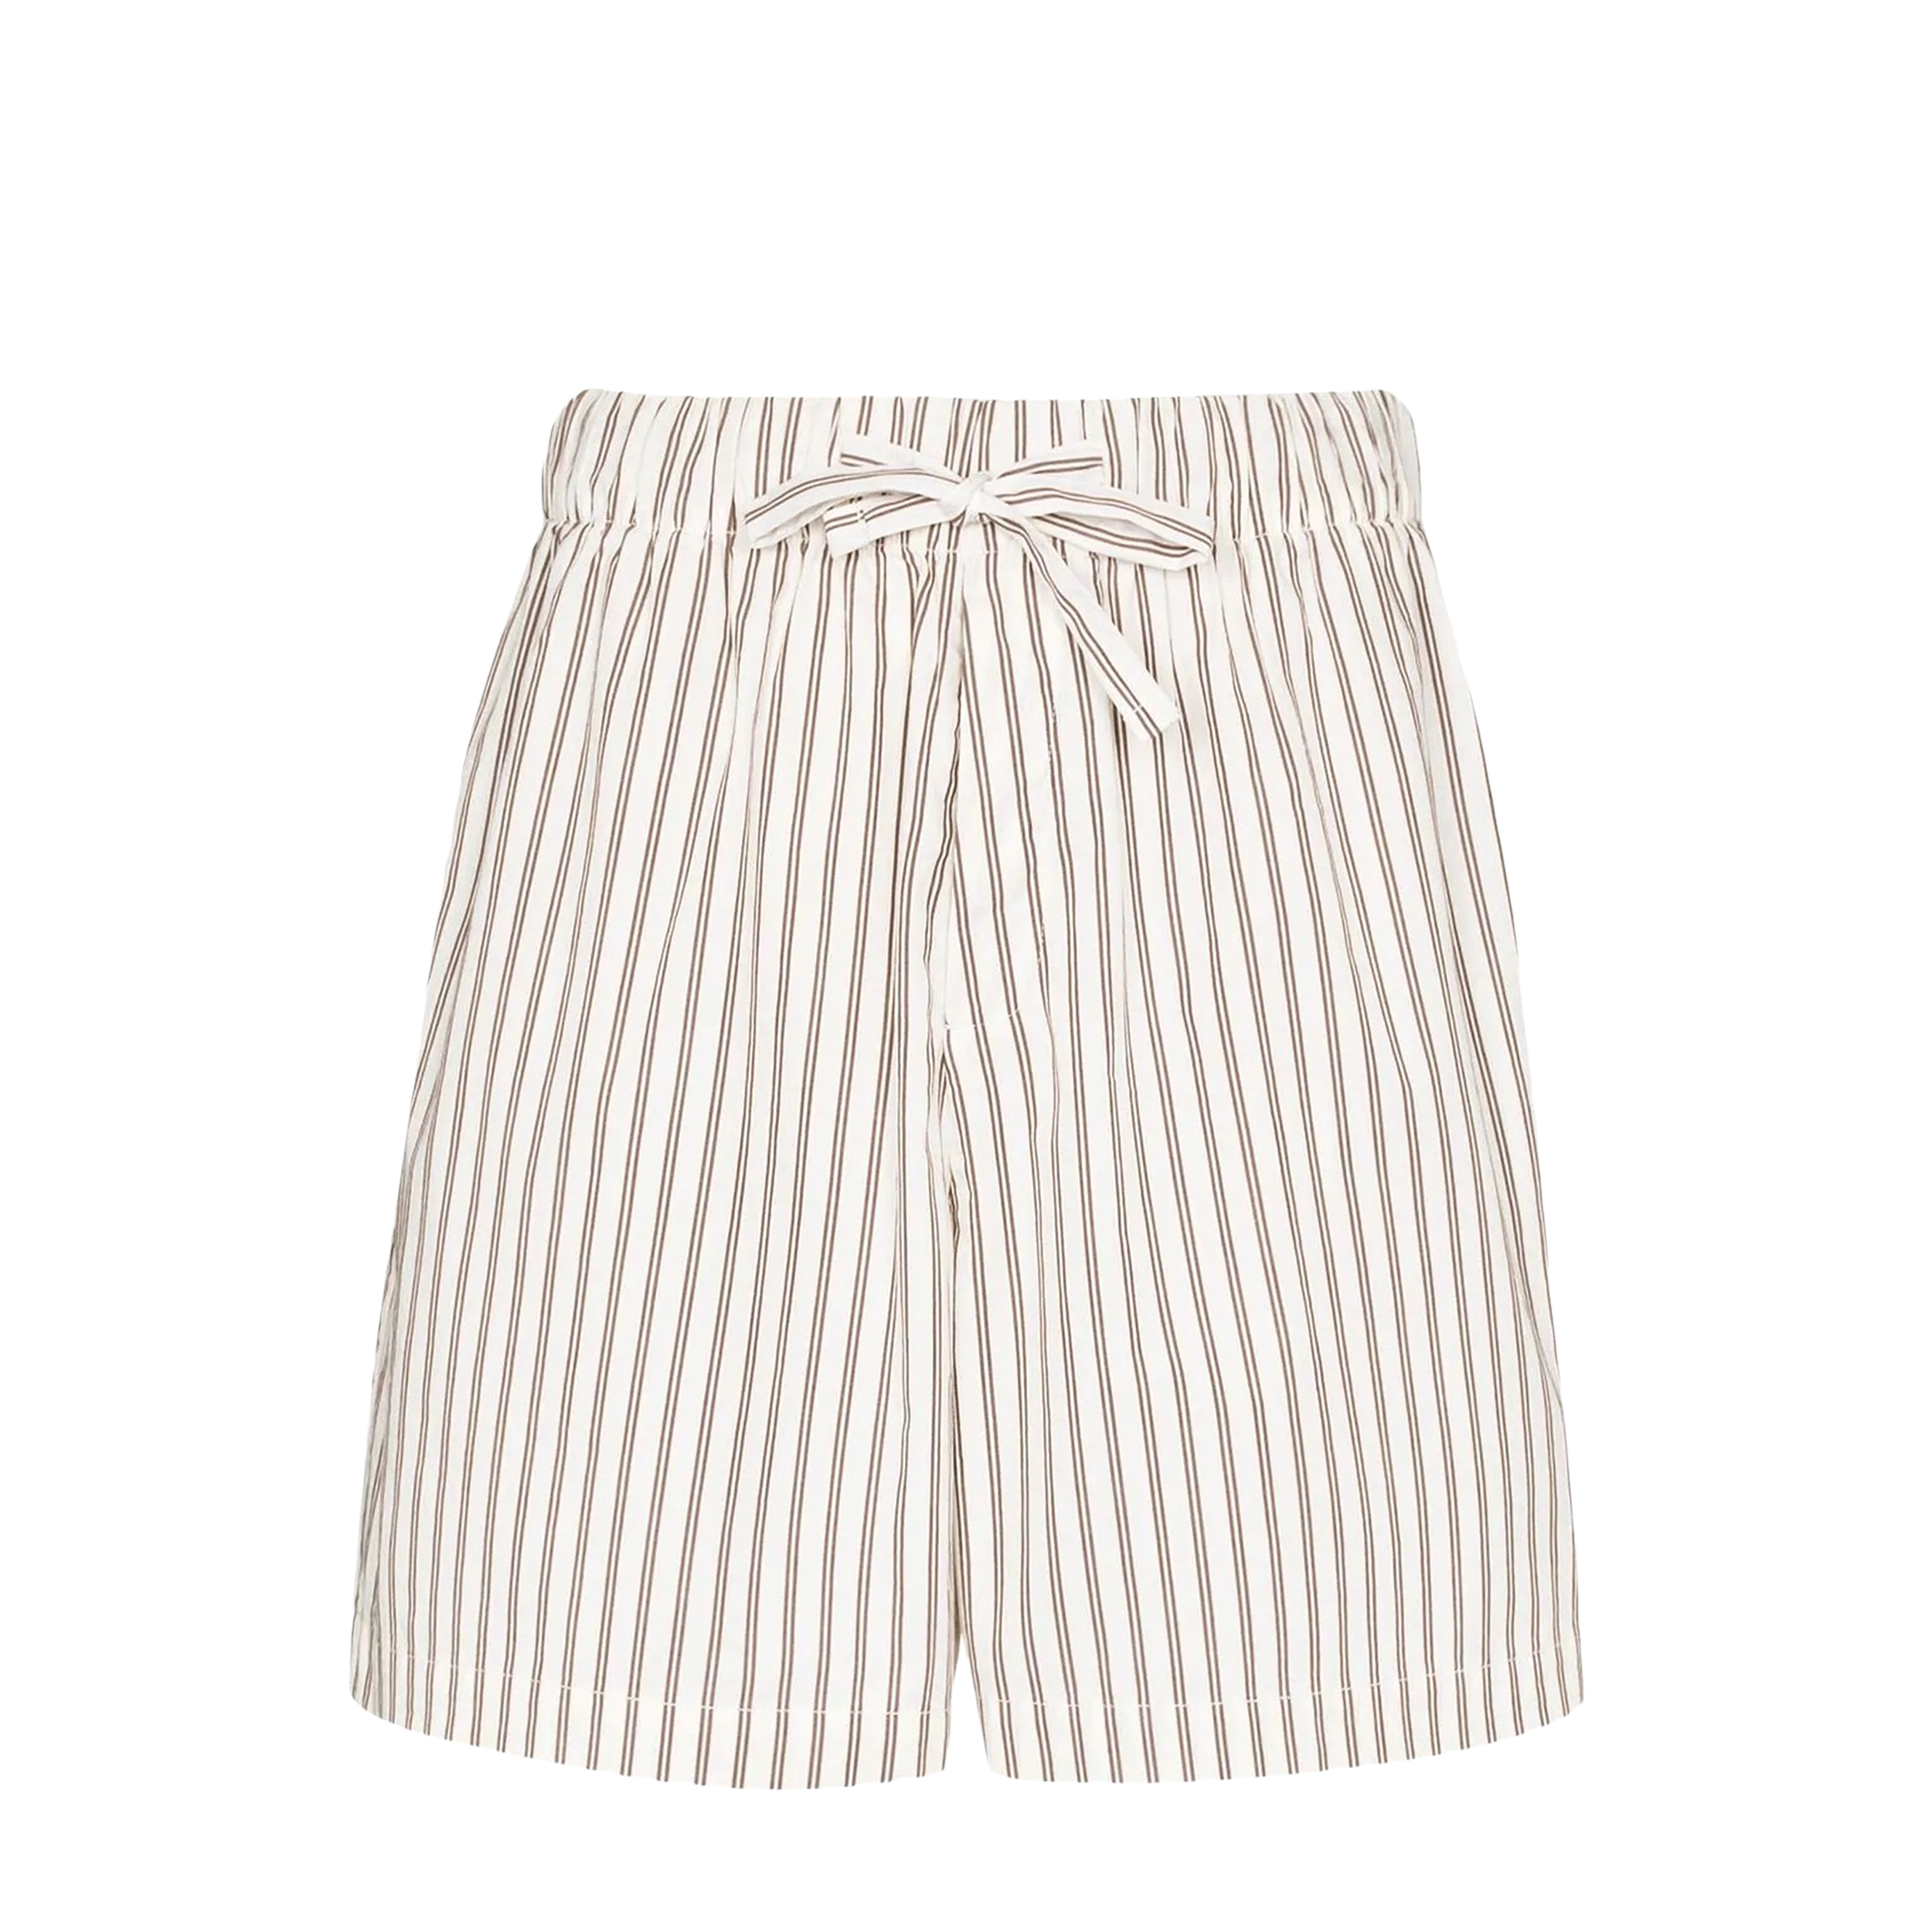 Tekla Tekla Poplin Pyjamas Shorts White & Brown Striped (M)